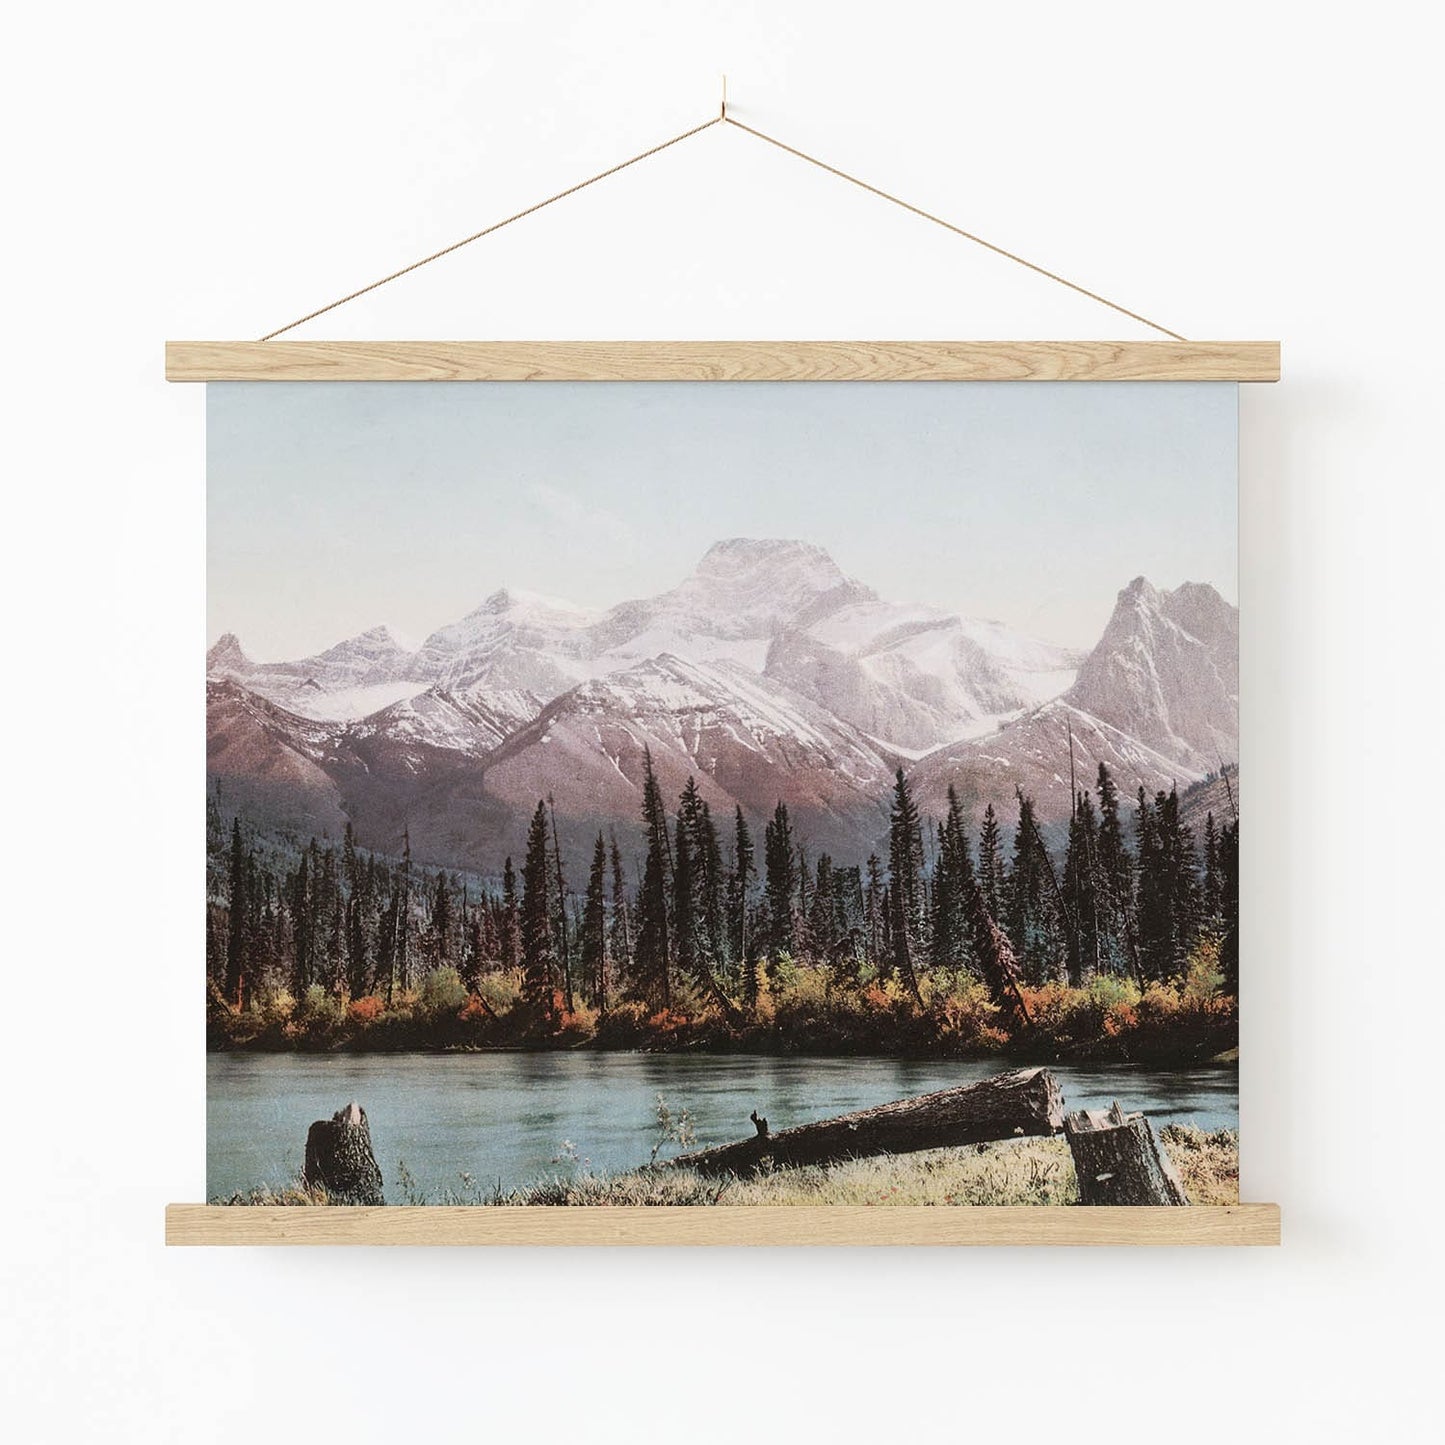 Beautiful Mountain Art Print in Wood Hanger Frame on Wall